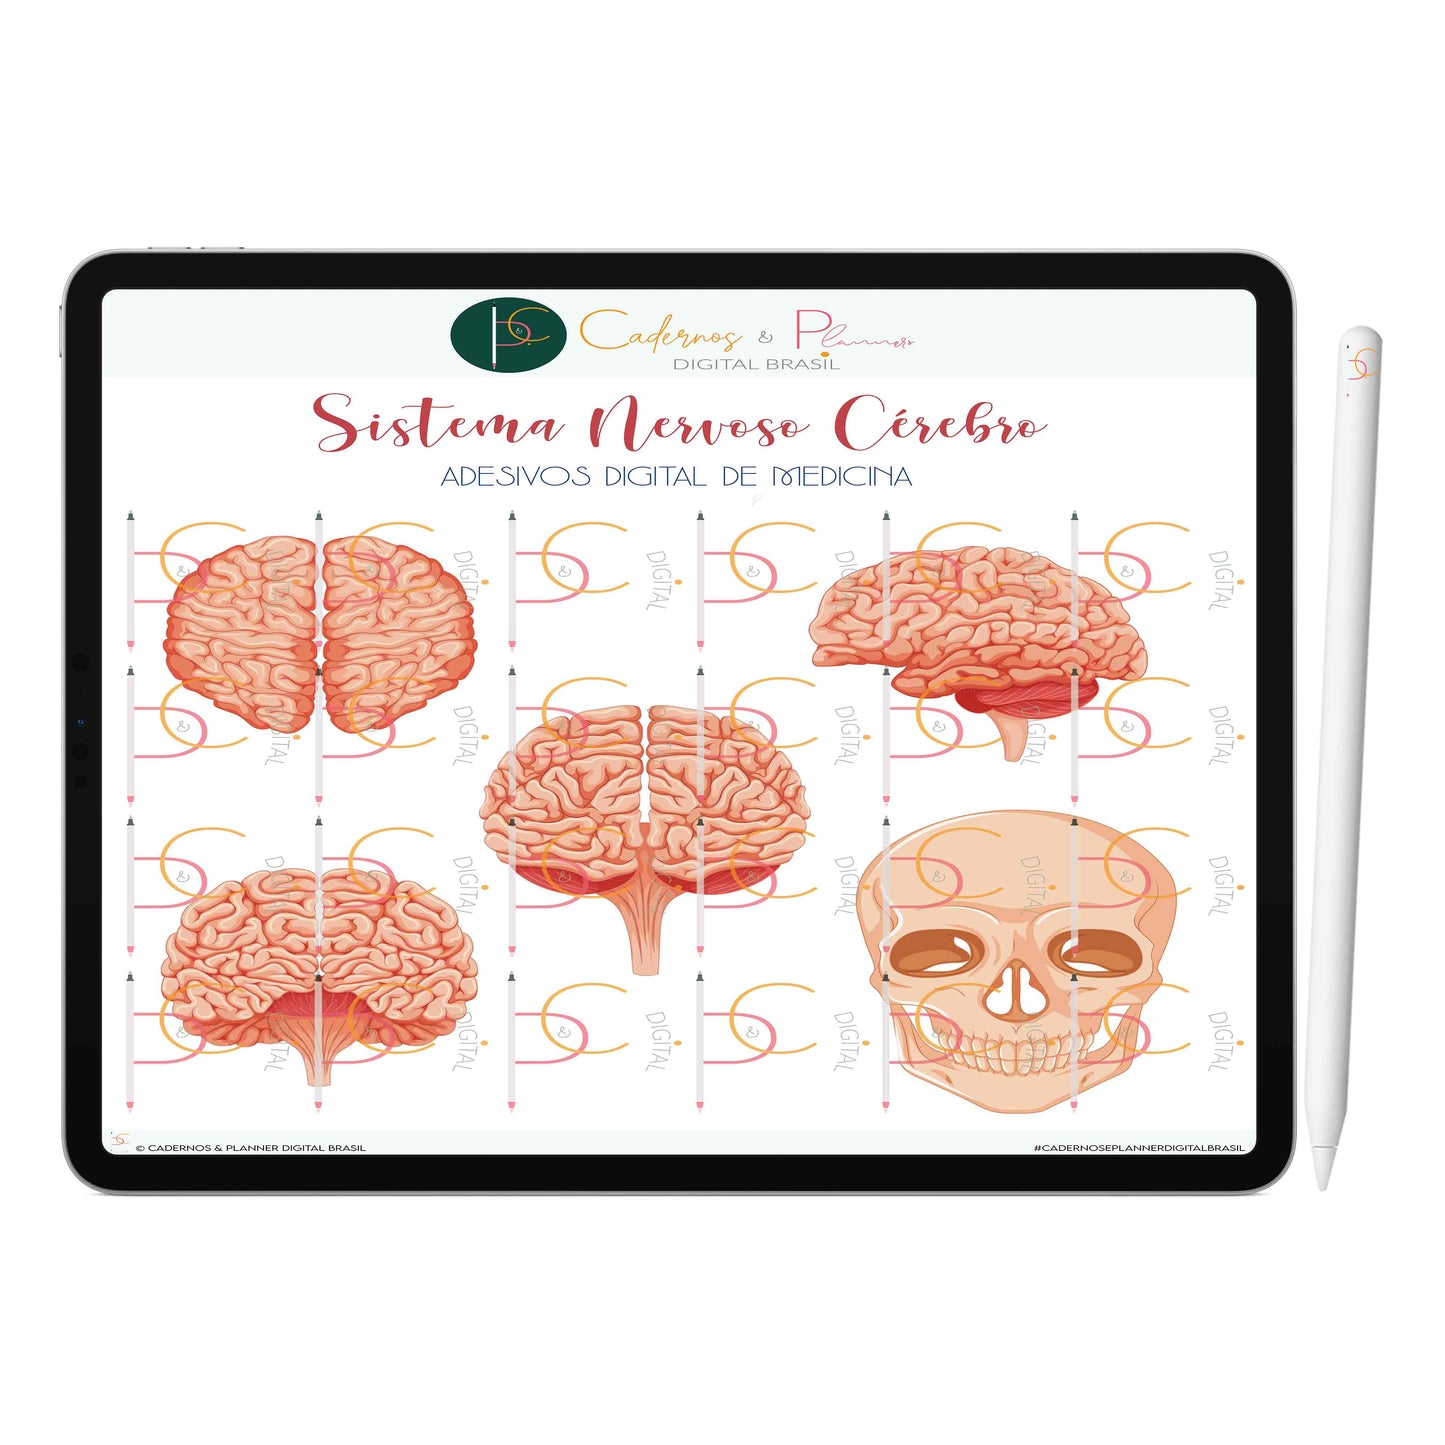 Adesivos Digital de Medicina - Sistema Nervoso Cerebral • iPad Tablet • GoodNotes Noteshelf